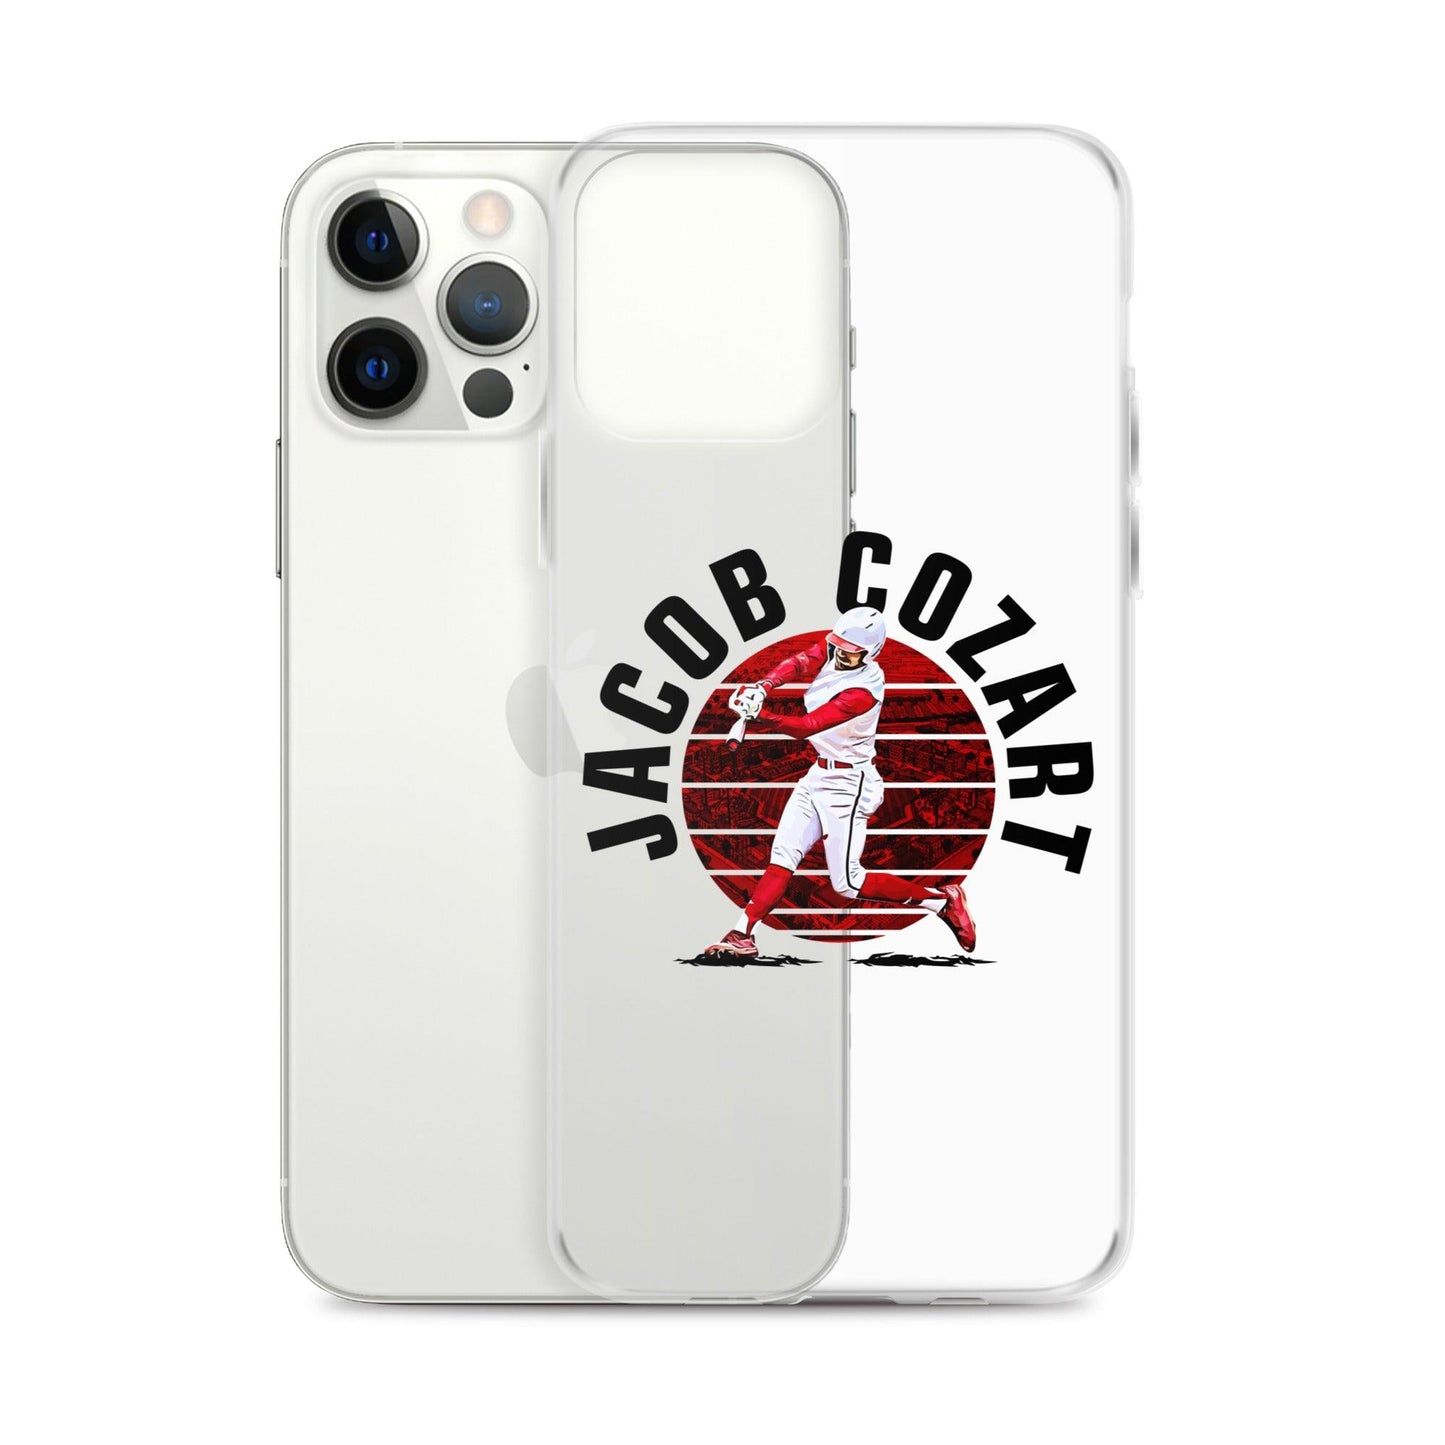 Jacob Cozart “Essential” iPhone Case - Fan Arch